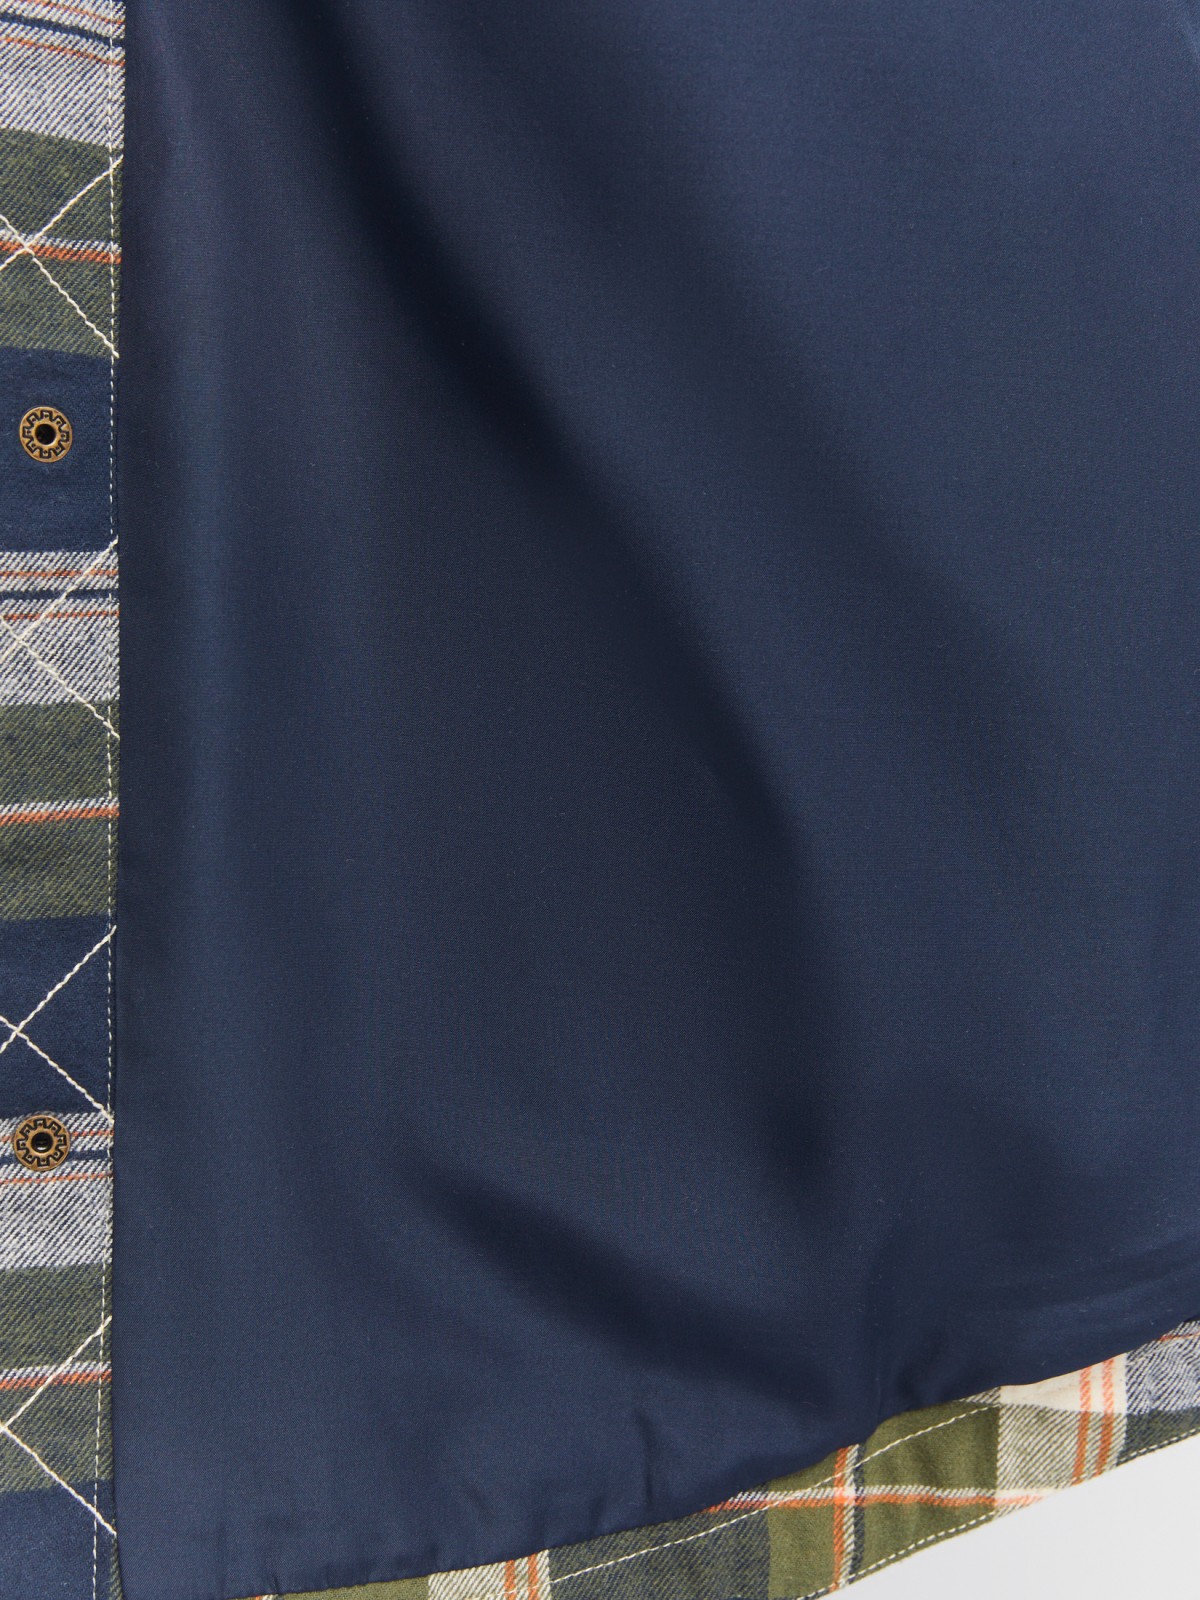 Утеплённая куртка-рубашка в клетку на синтепоне zolla 014135159094, цвет голубой, размер M - фото 6